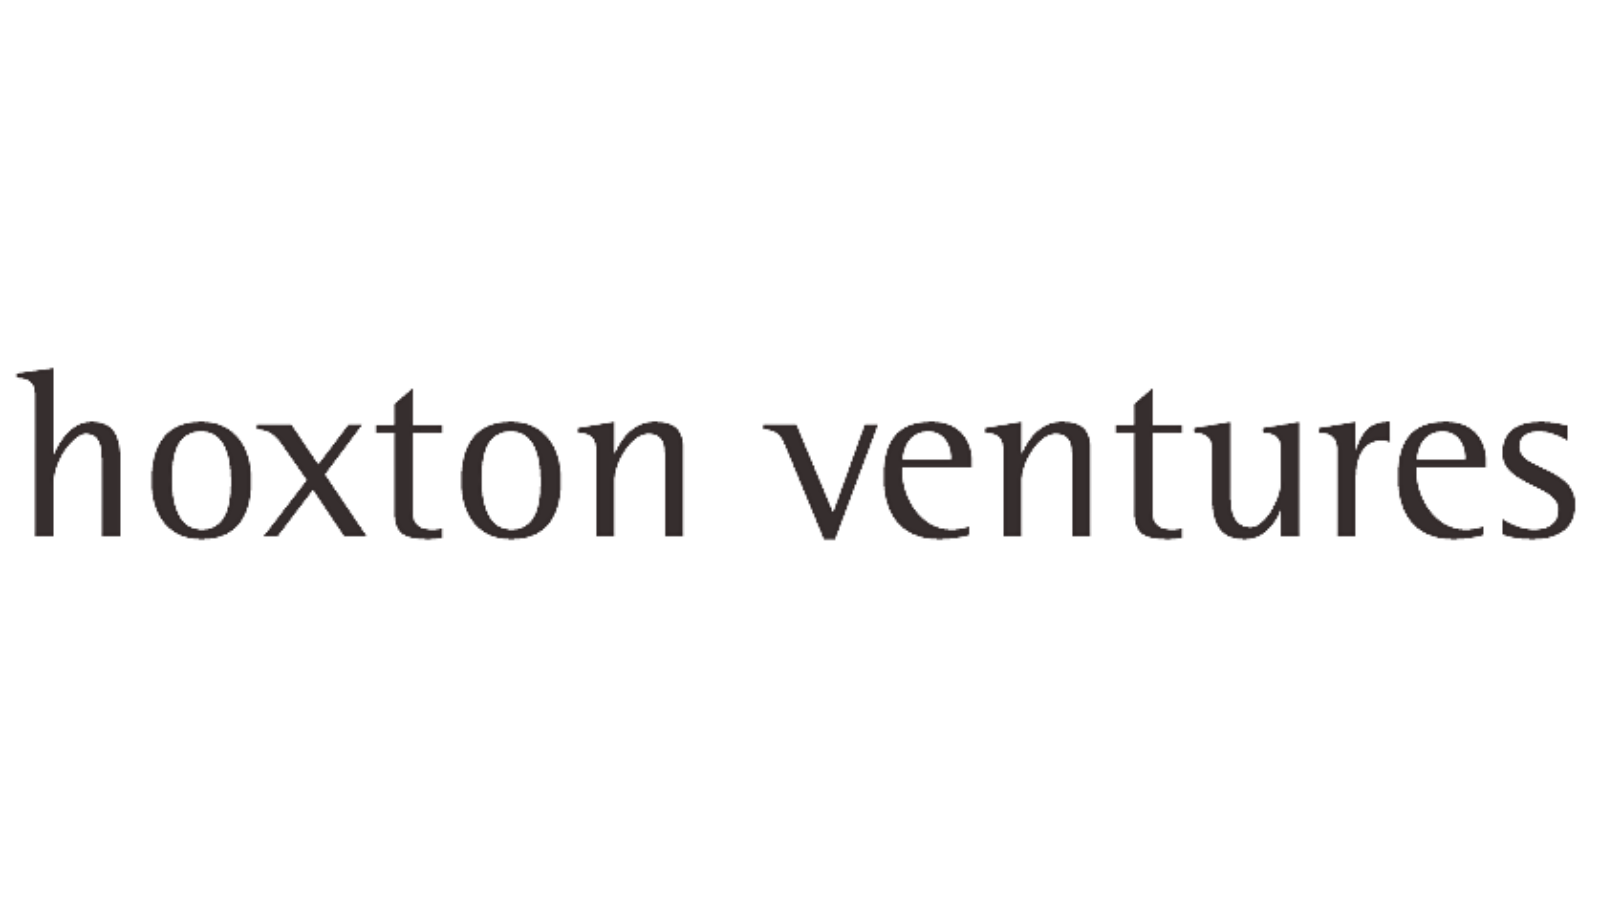 Hoxton Ventures